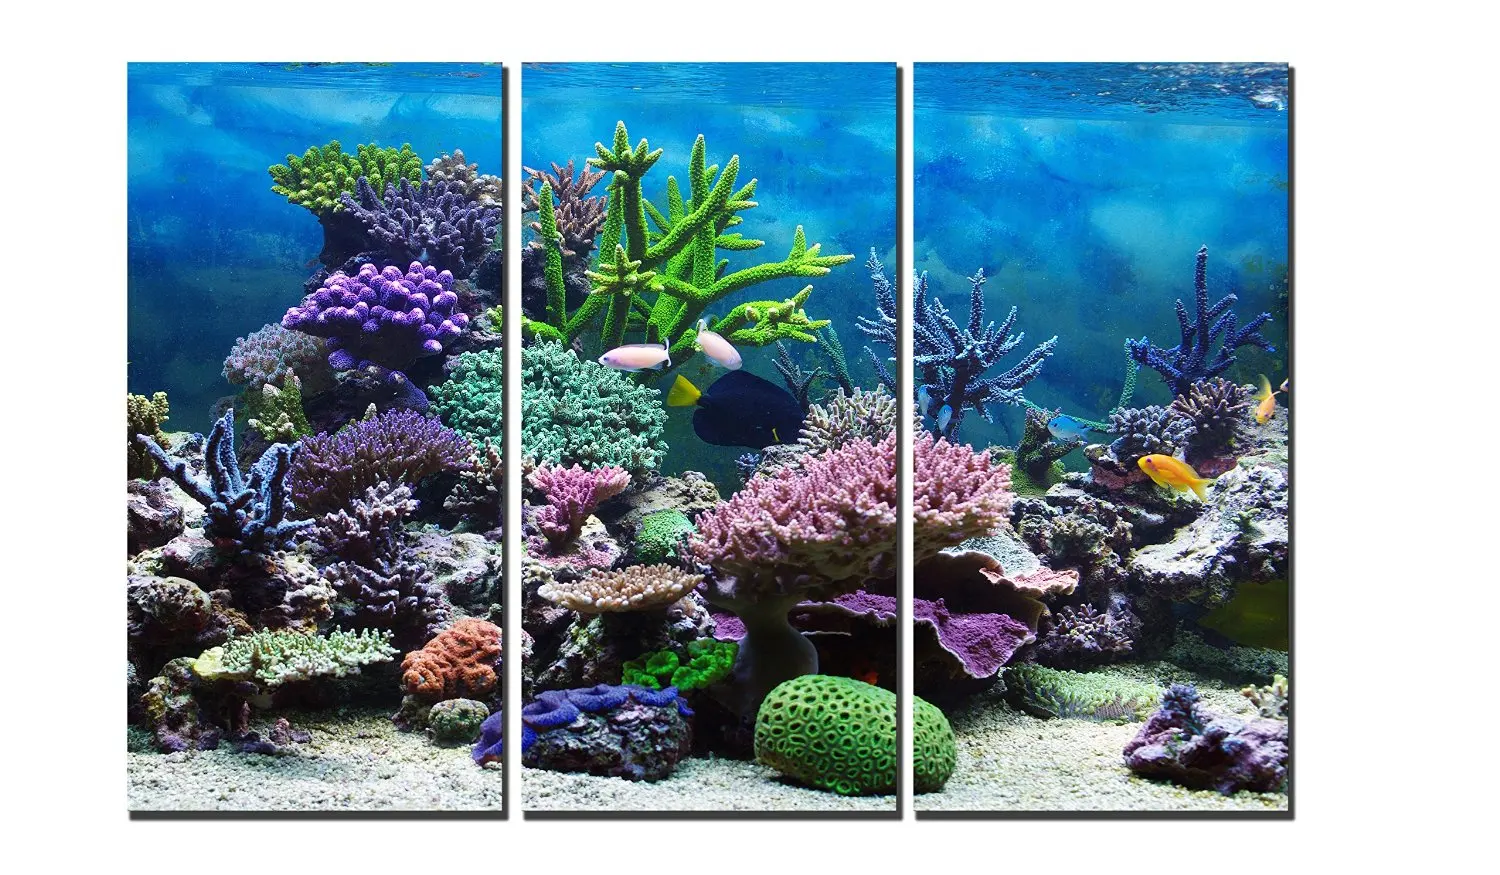 Cheap Sea Coral Prints, find Sea Coral Prints deals on line at Alibaba.com